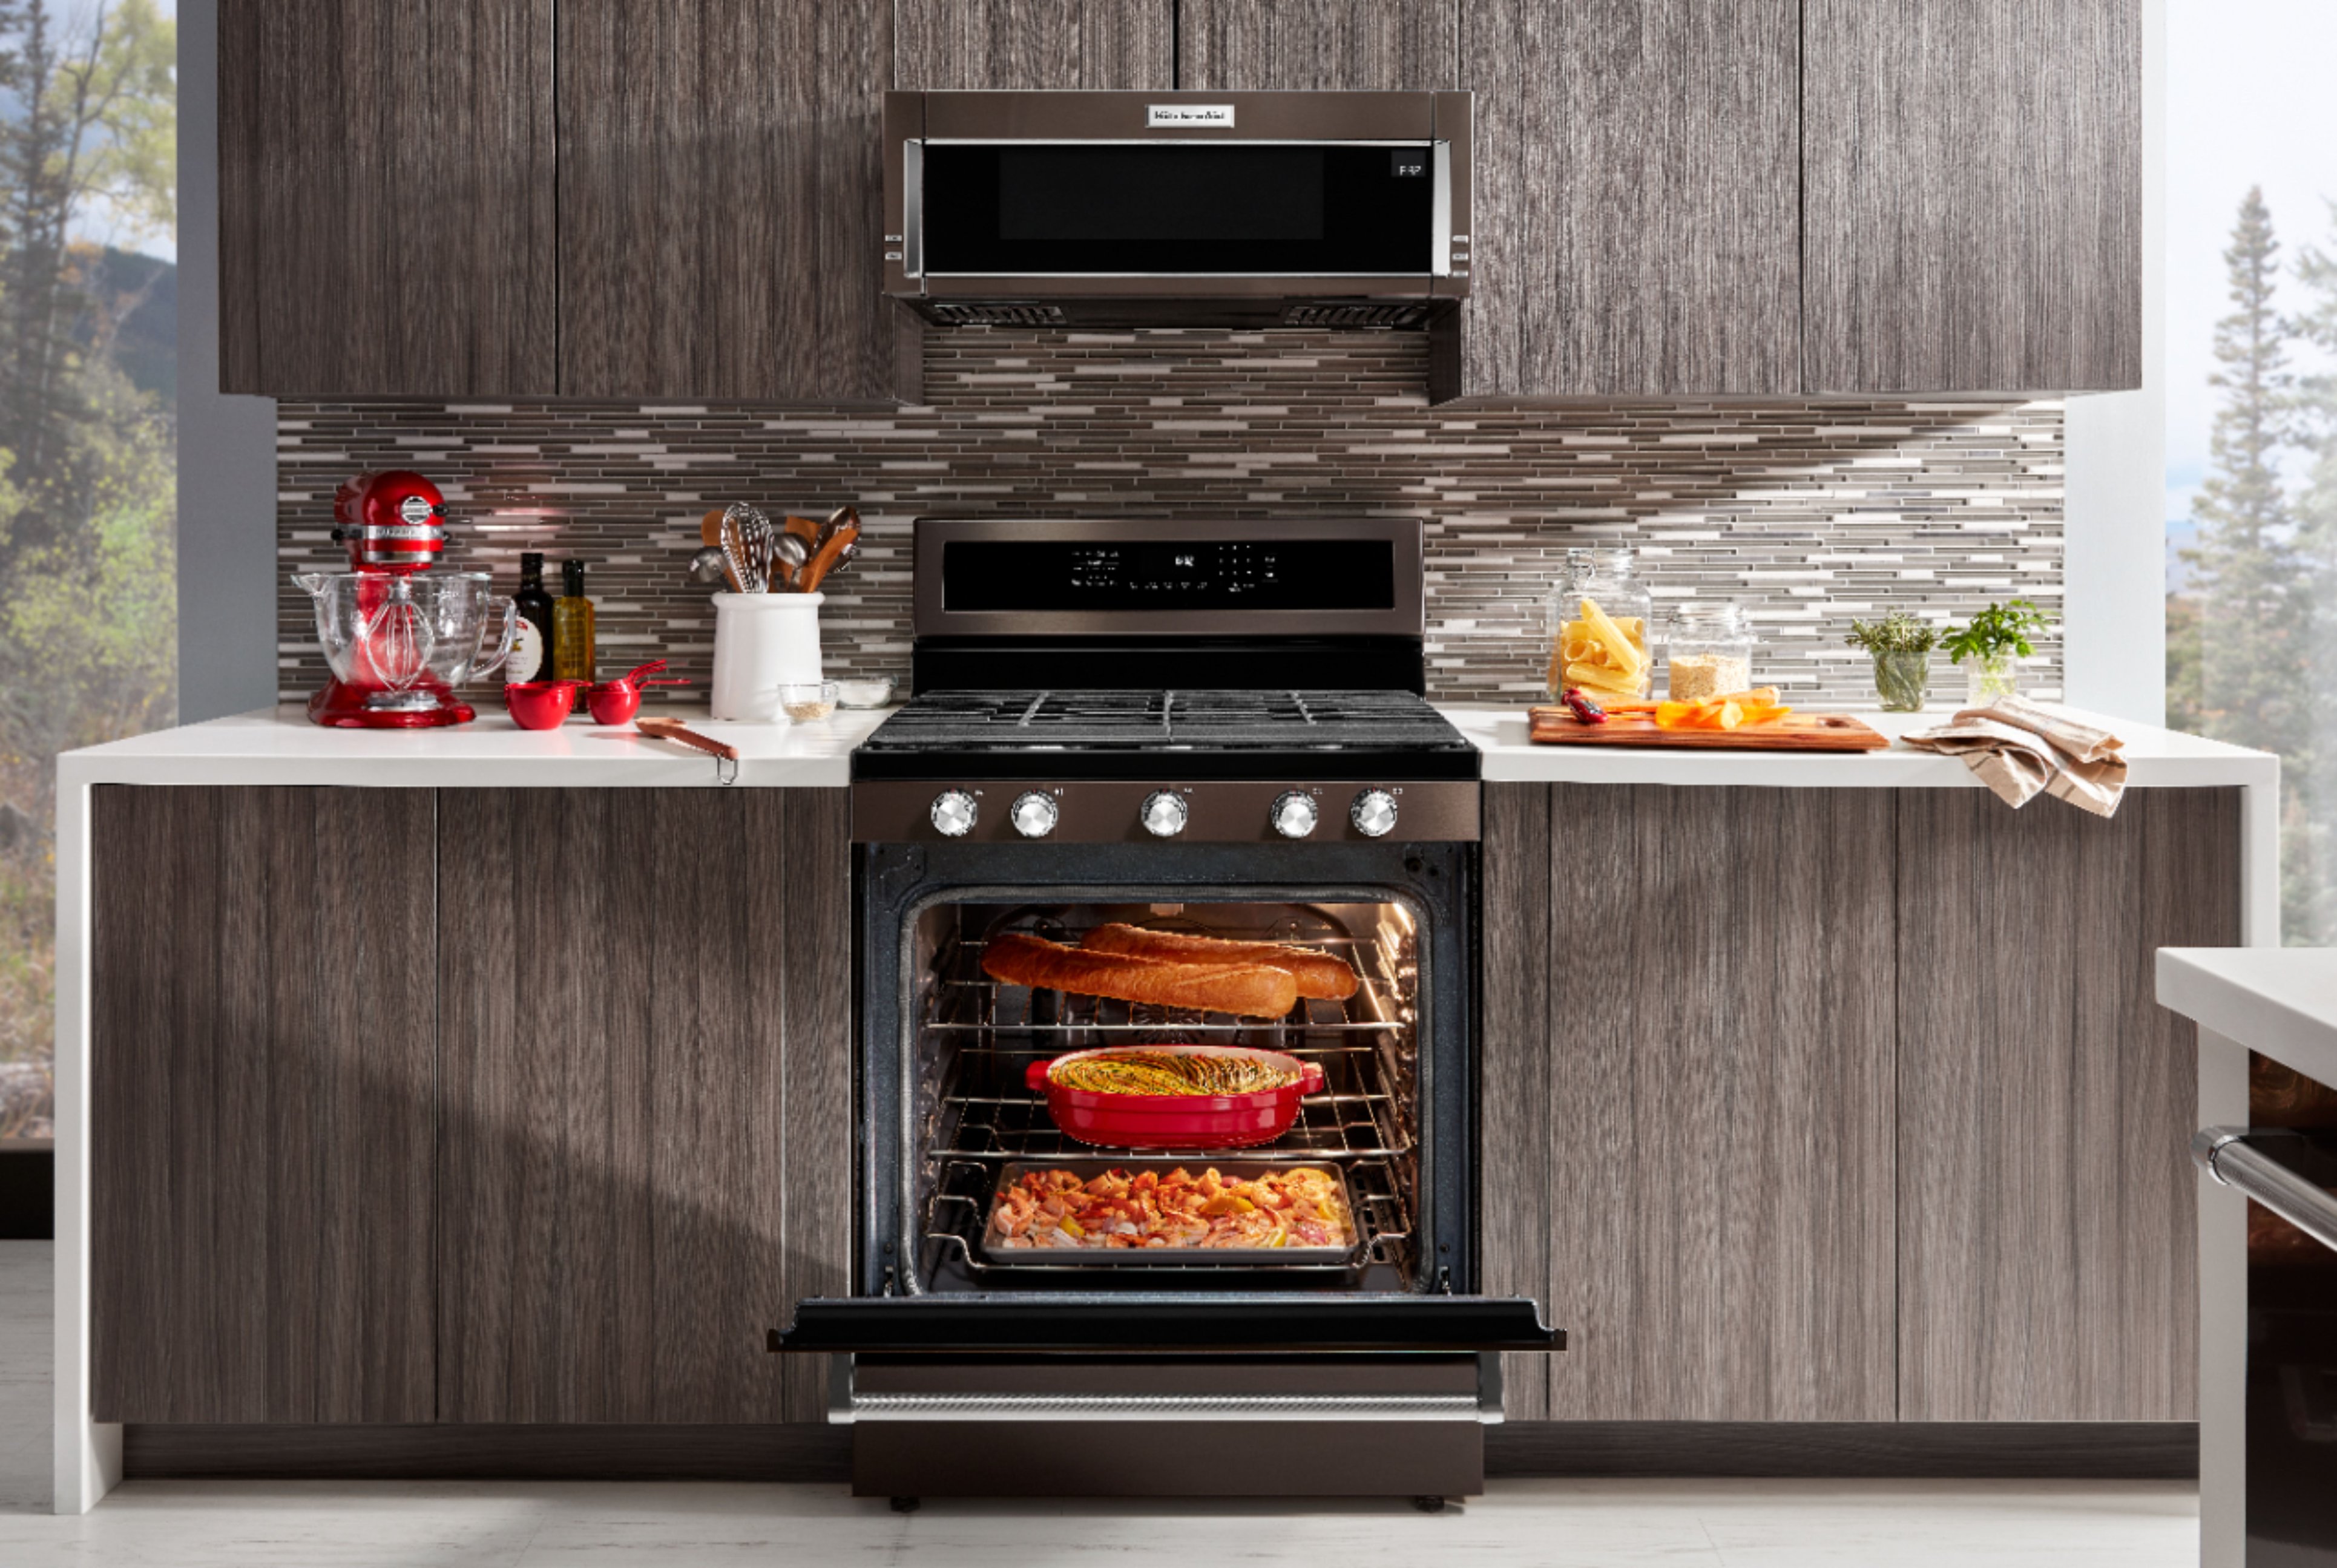 Best Buy: KitchenAid KCSS08LS 8-Piece Stainless Steel Cookware Set